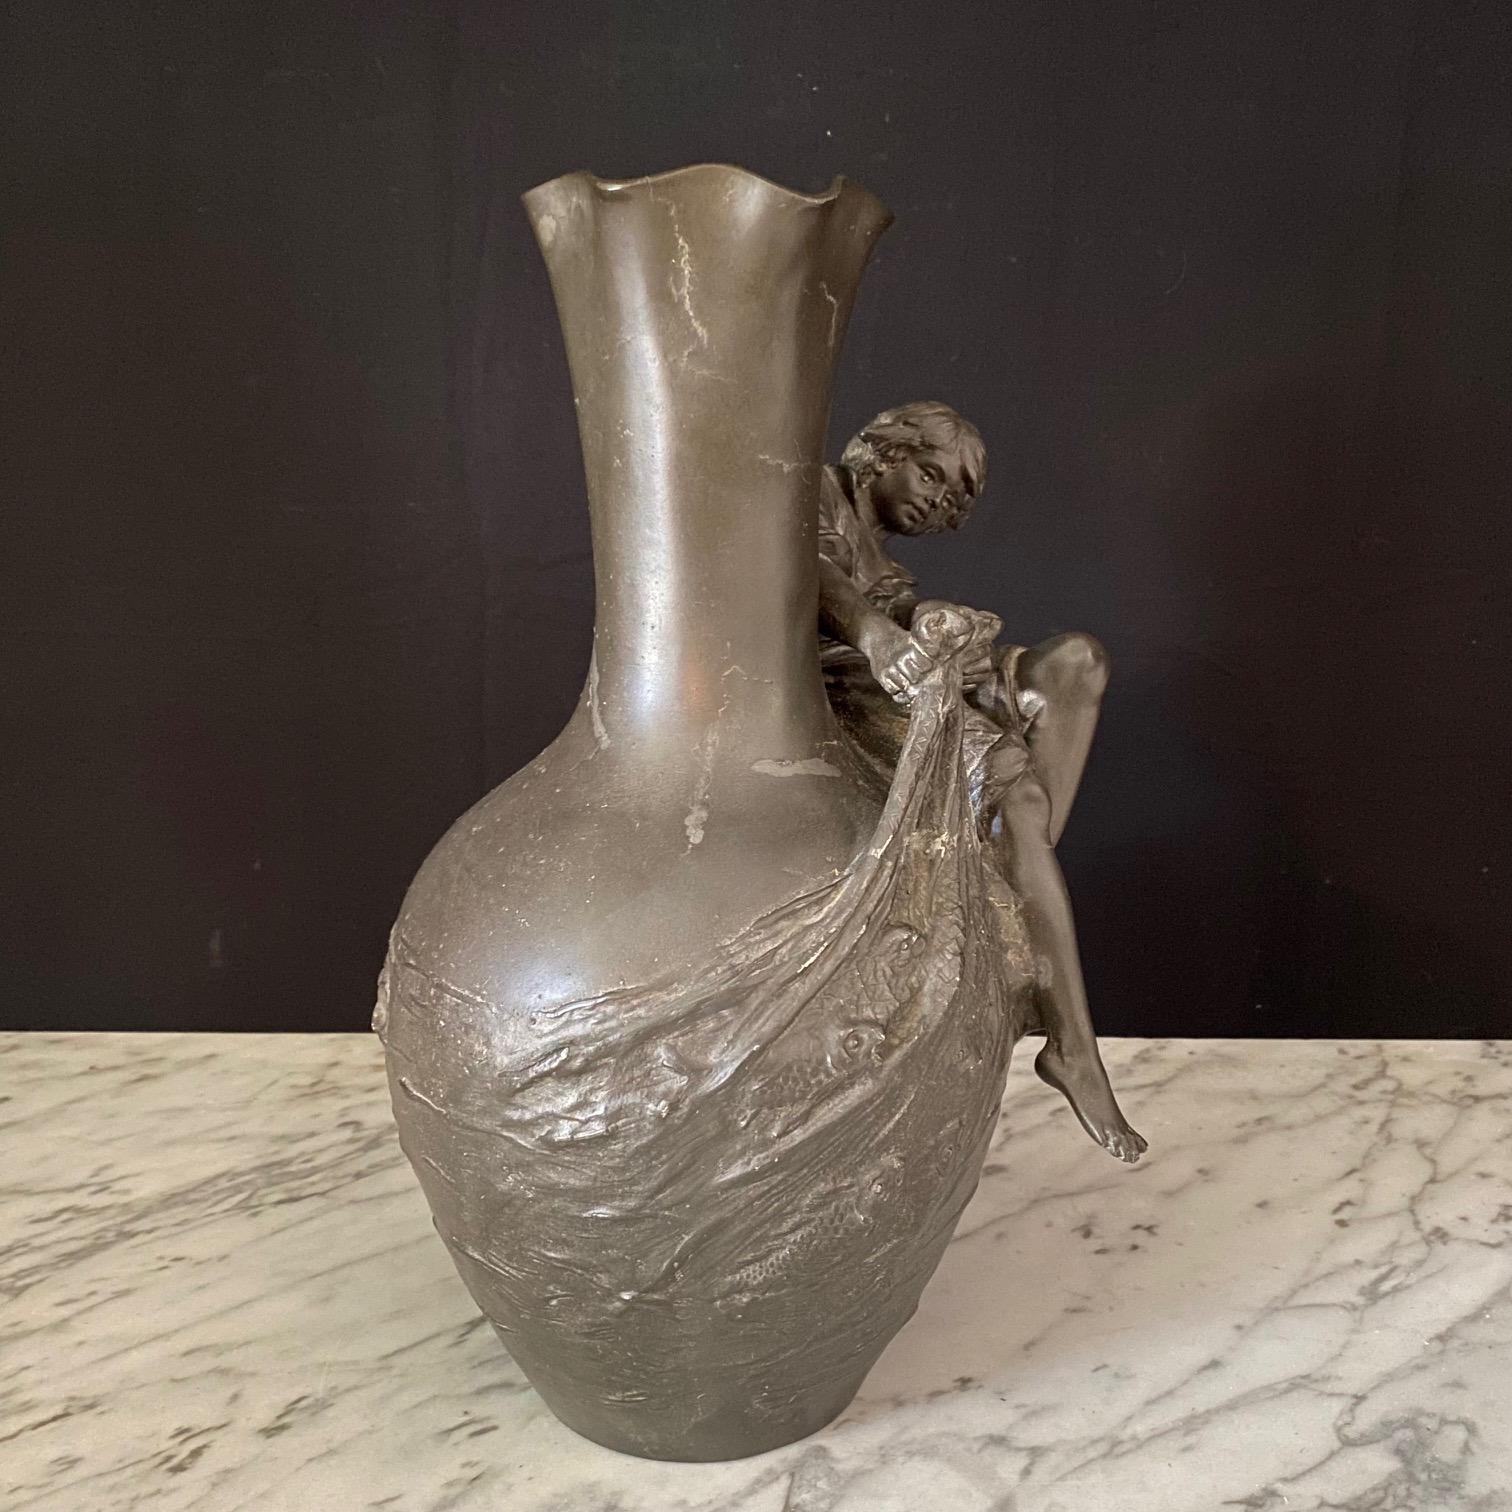  Auguste Moreau Pair of Signed French Art Nouveau Sculptural Vases For Sale 2